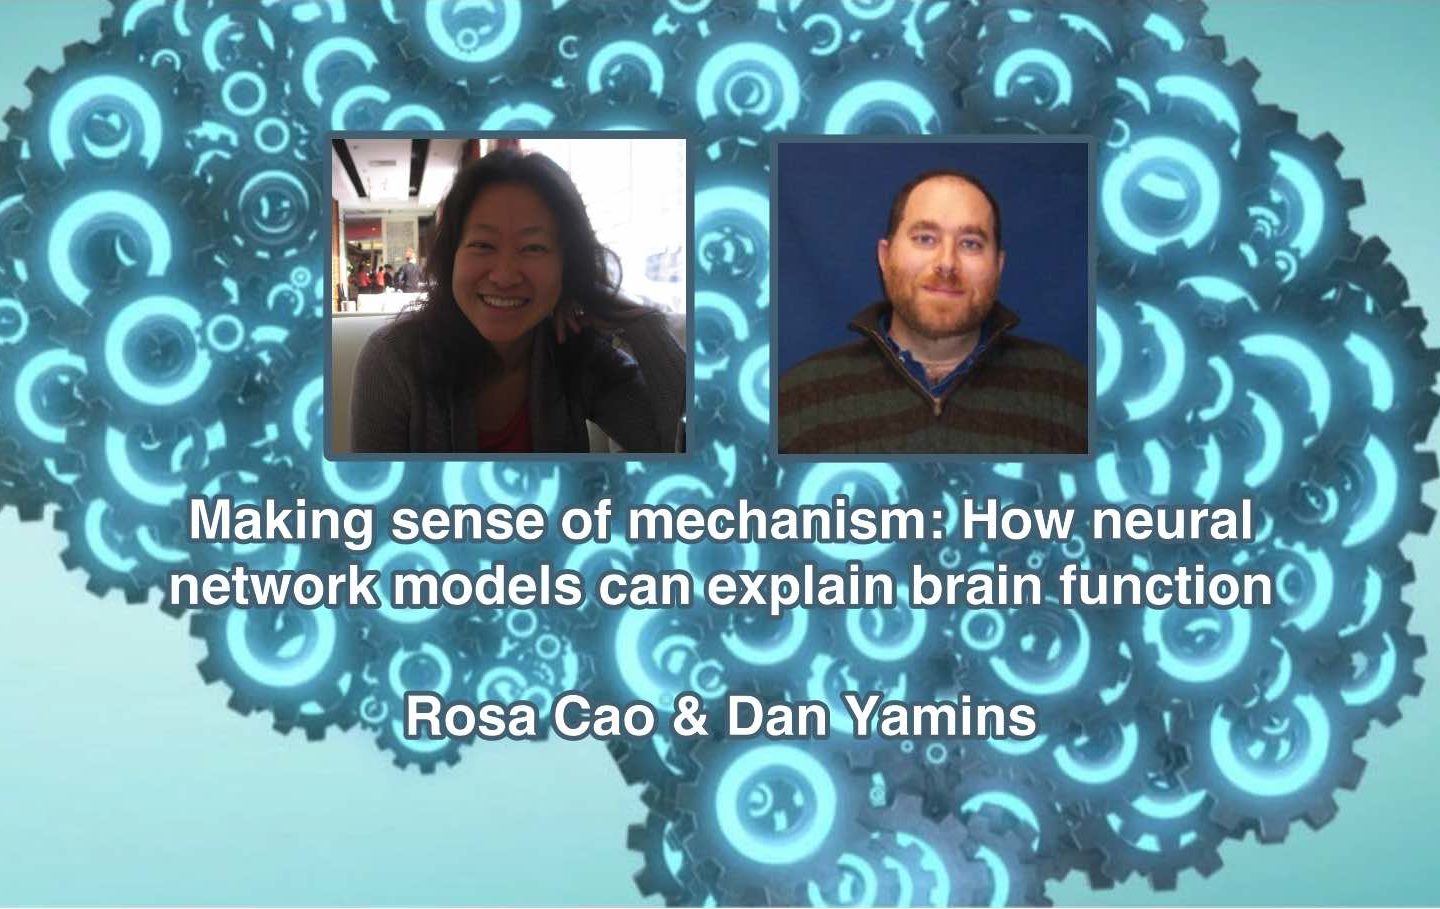 Rosa Cao and Dan Yamins livestream “Making sense of mechanism” on May 22